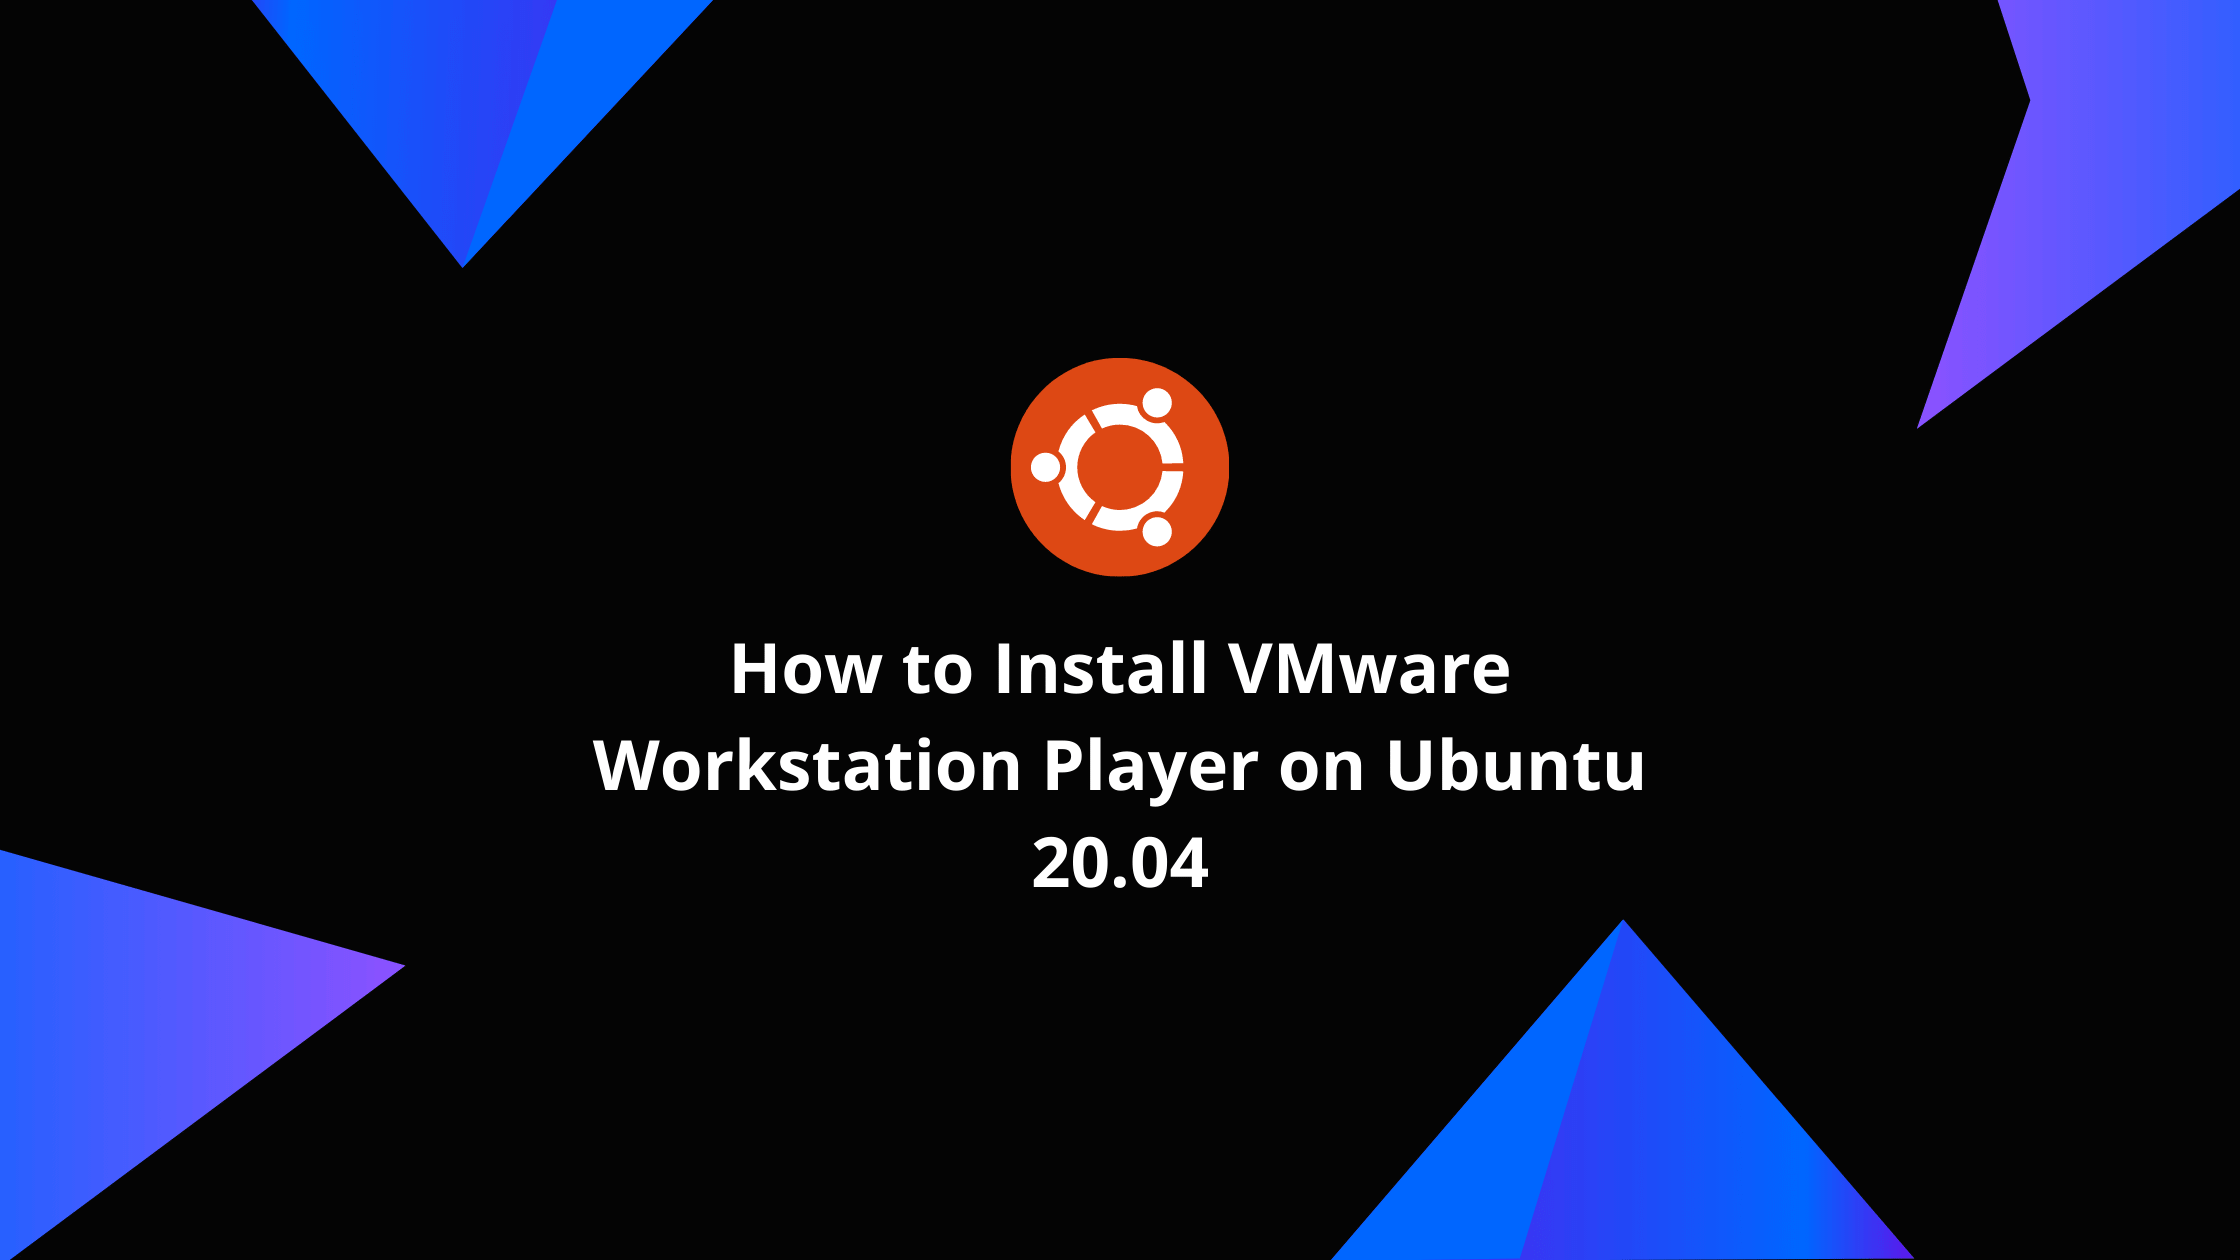 vmware workstation for ubuntu 20.04 free download